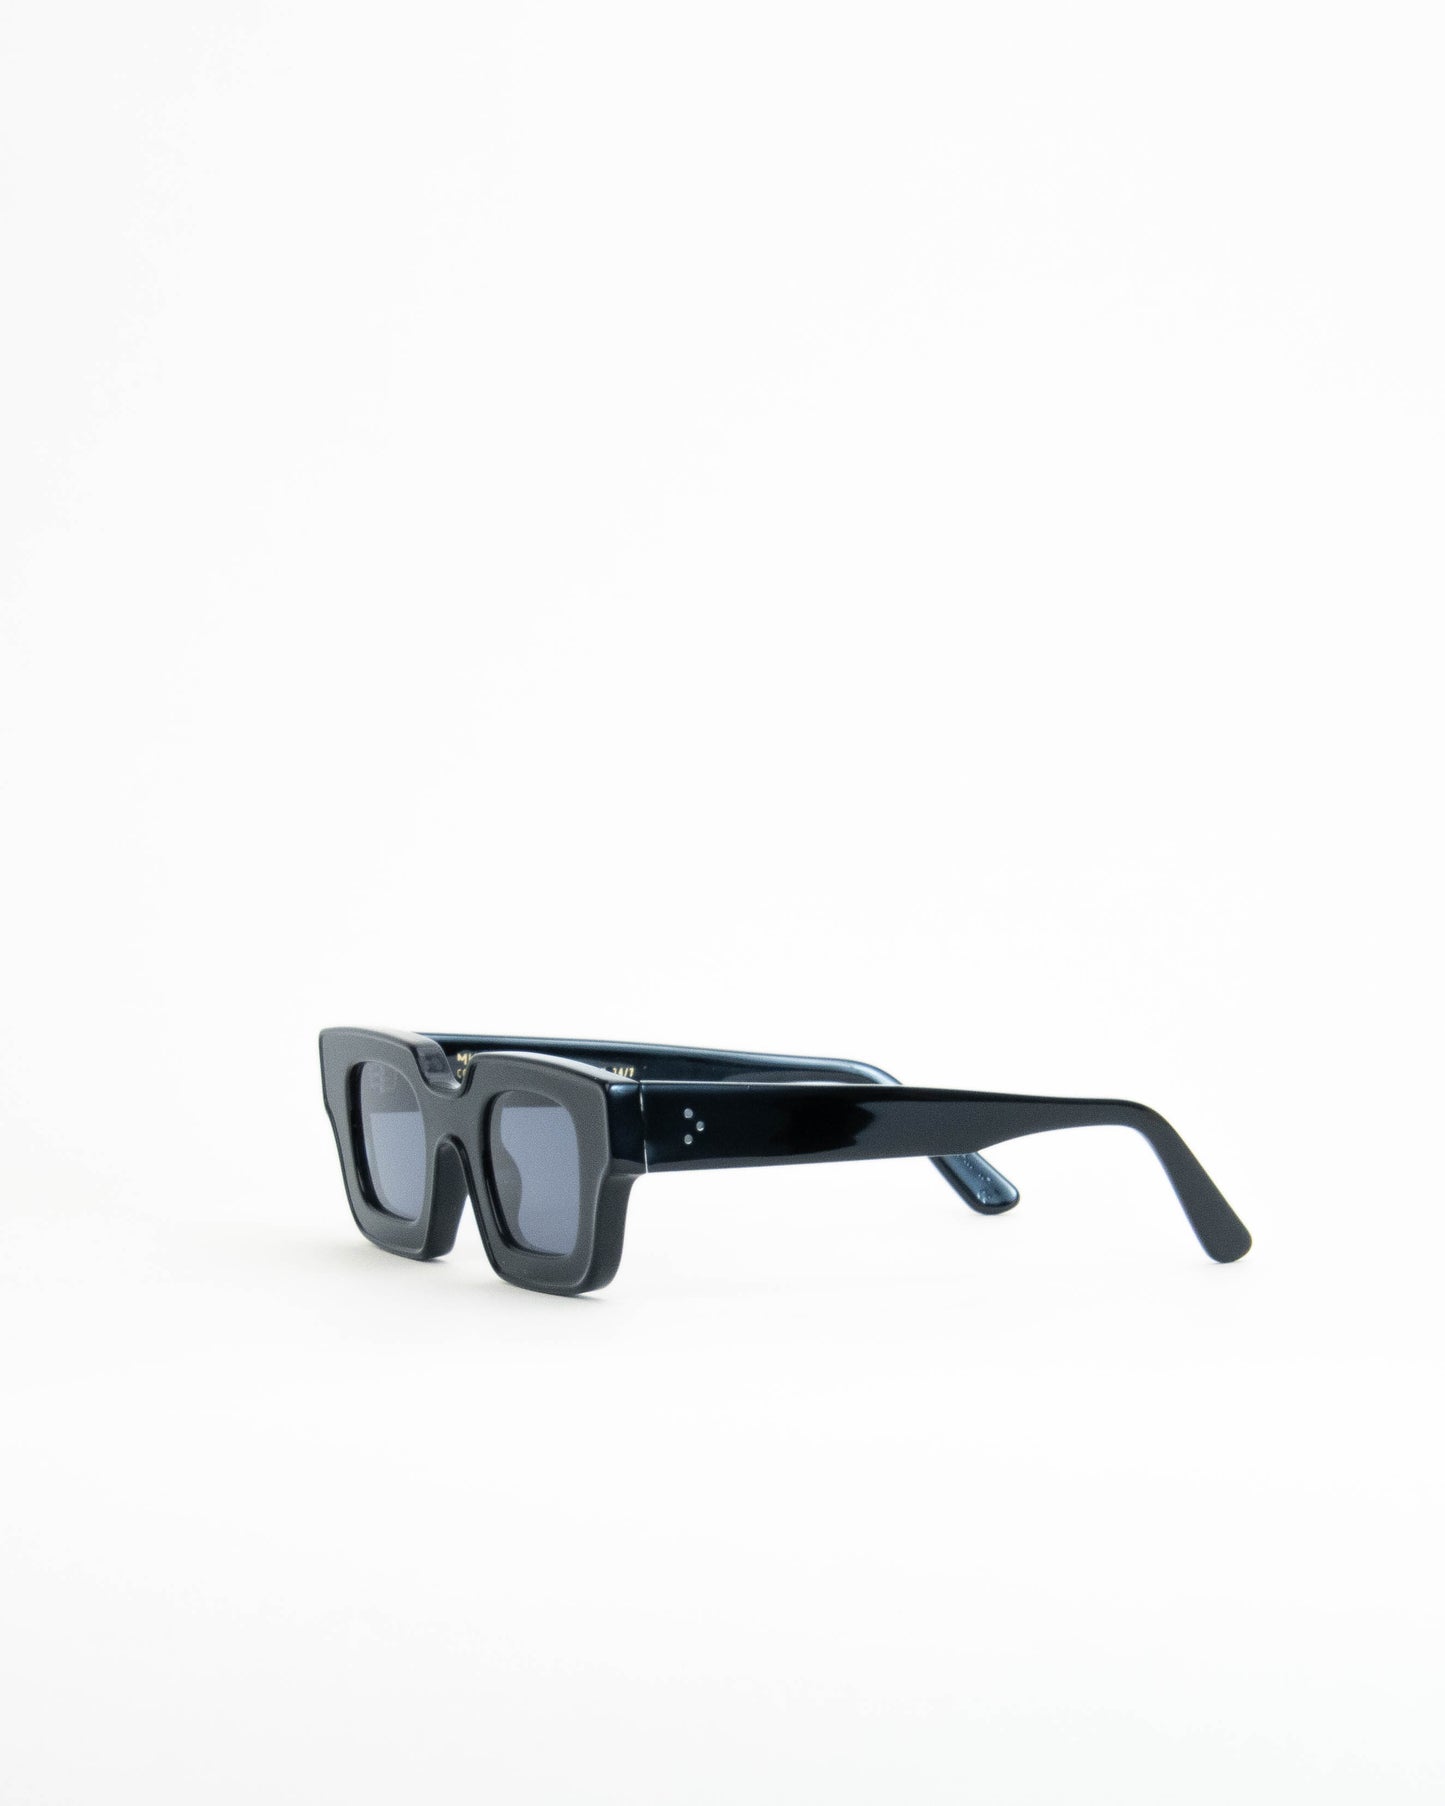 Correos Dark Horses luxury sunglasses